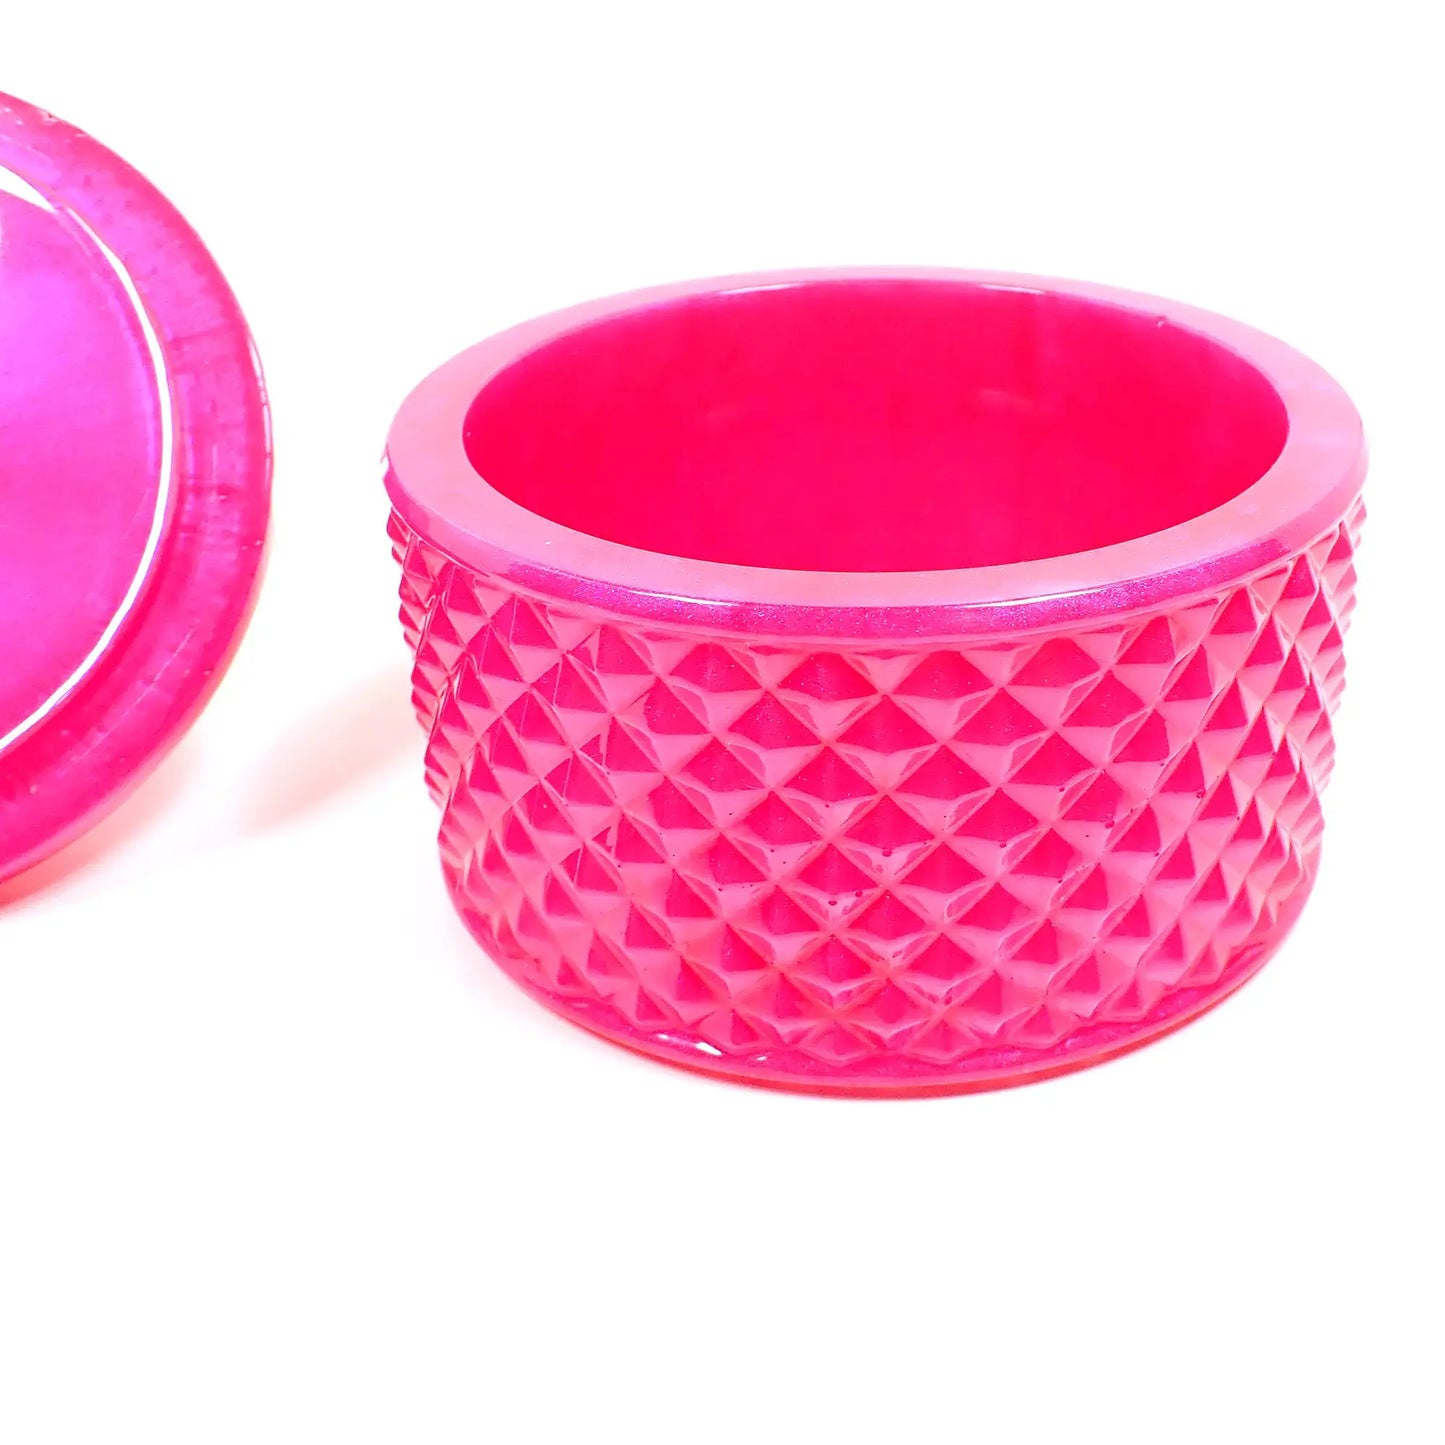 Handmade Pearly Bright Hot Pink Trinket Box Candy Dish